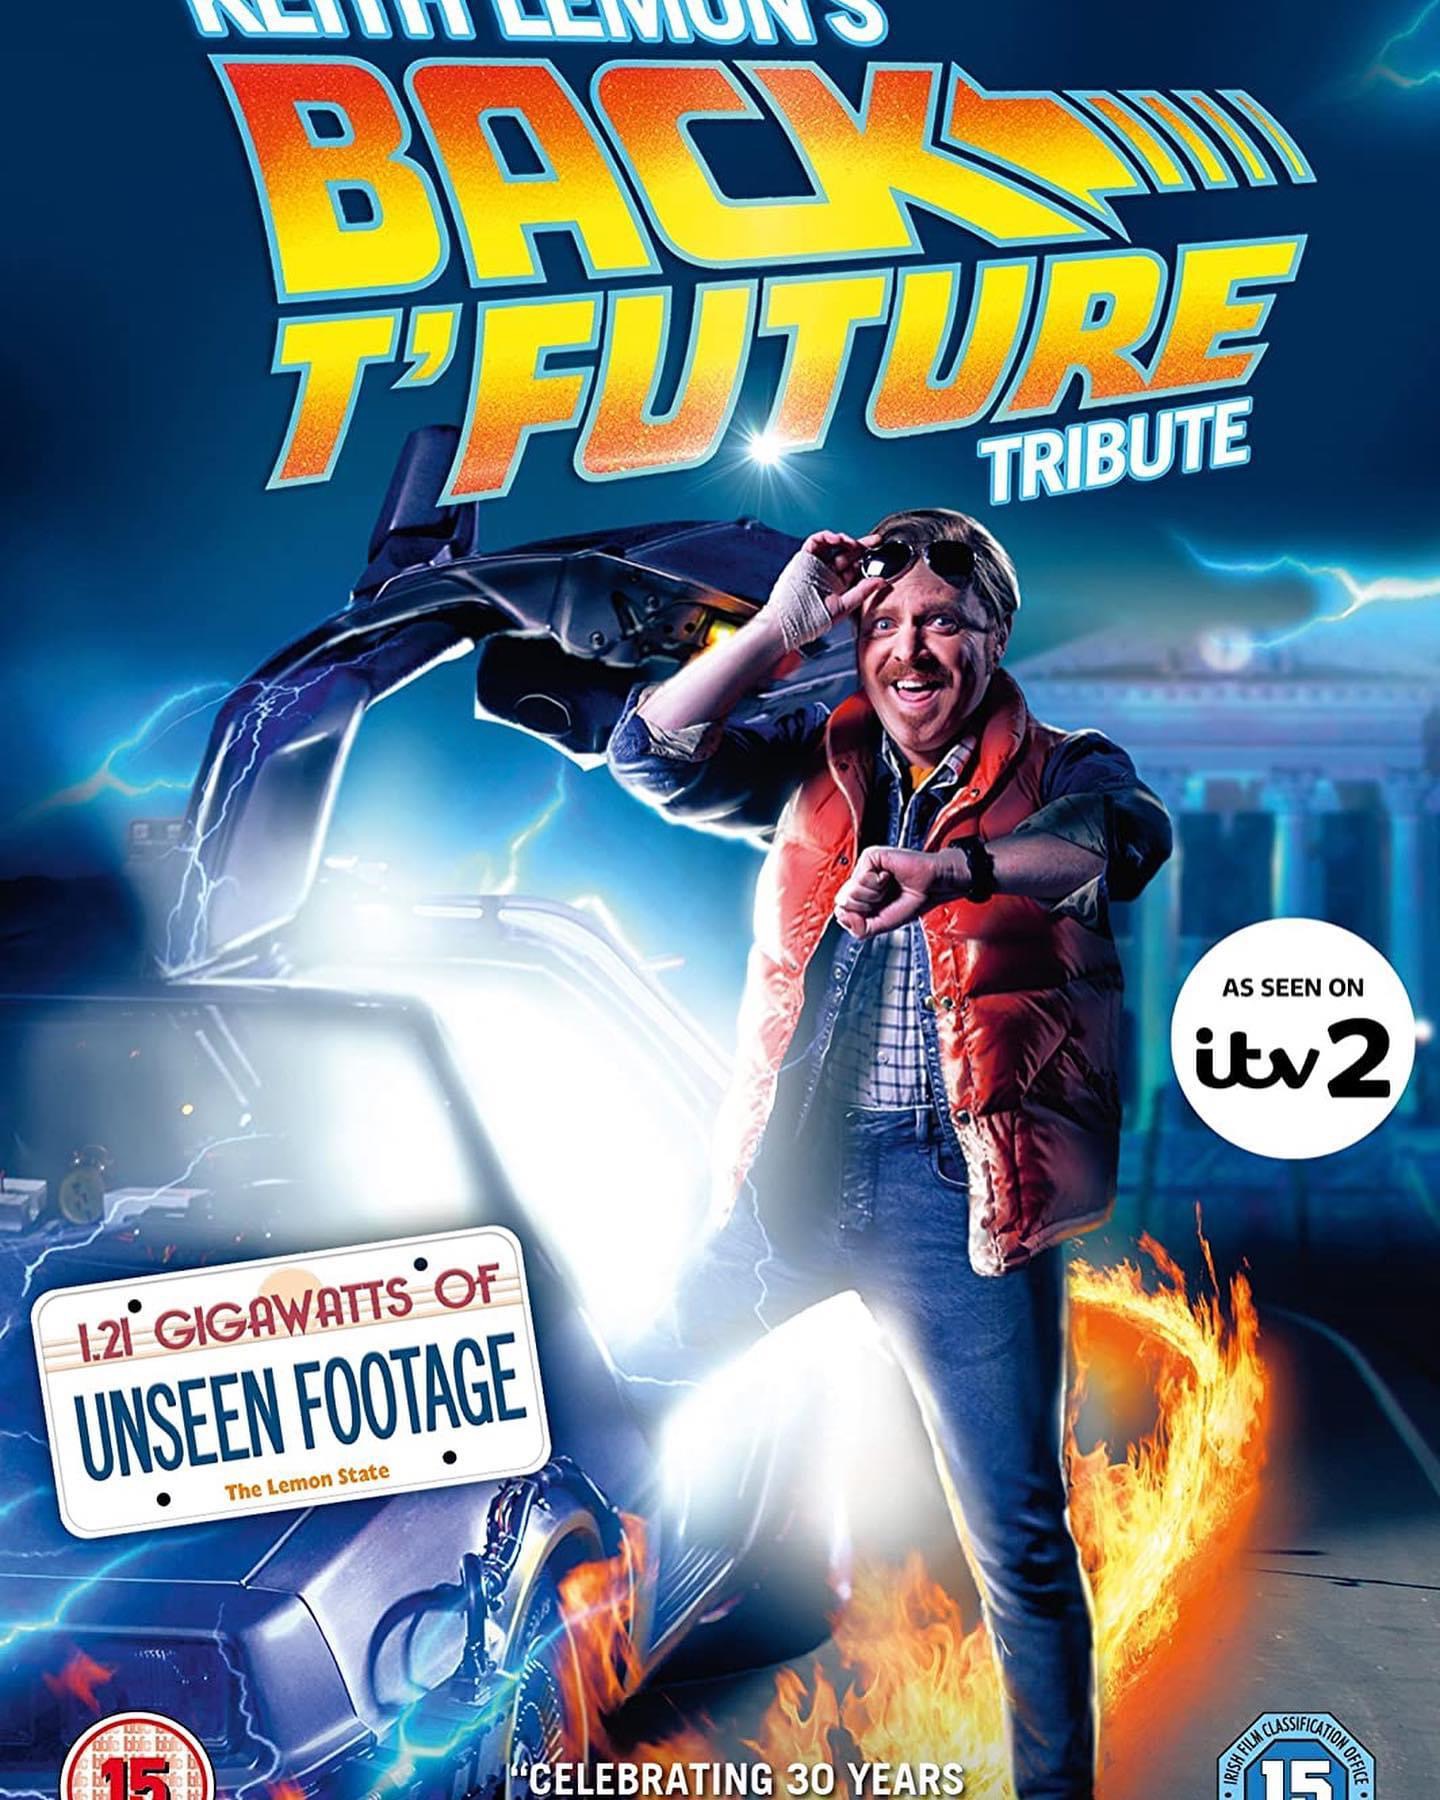 BTTF Car DeLorean Time Machine Hire on ITV Keith Lemon Back to the Future Tribute Show